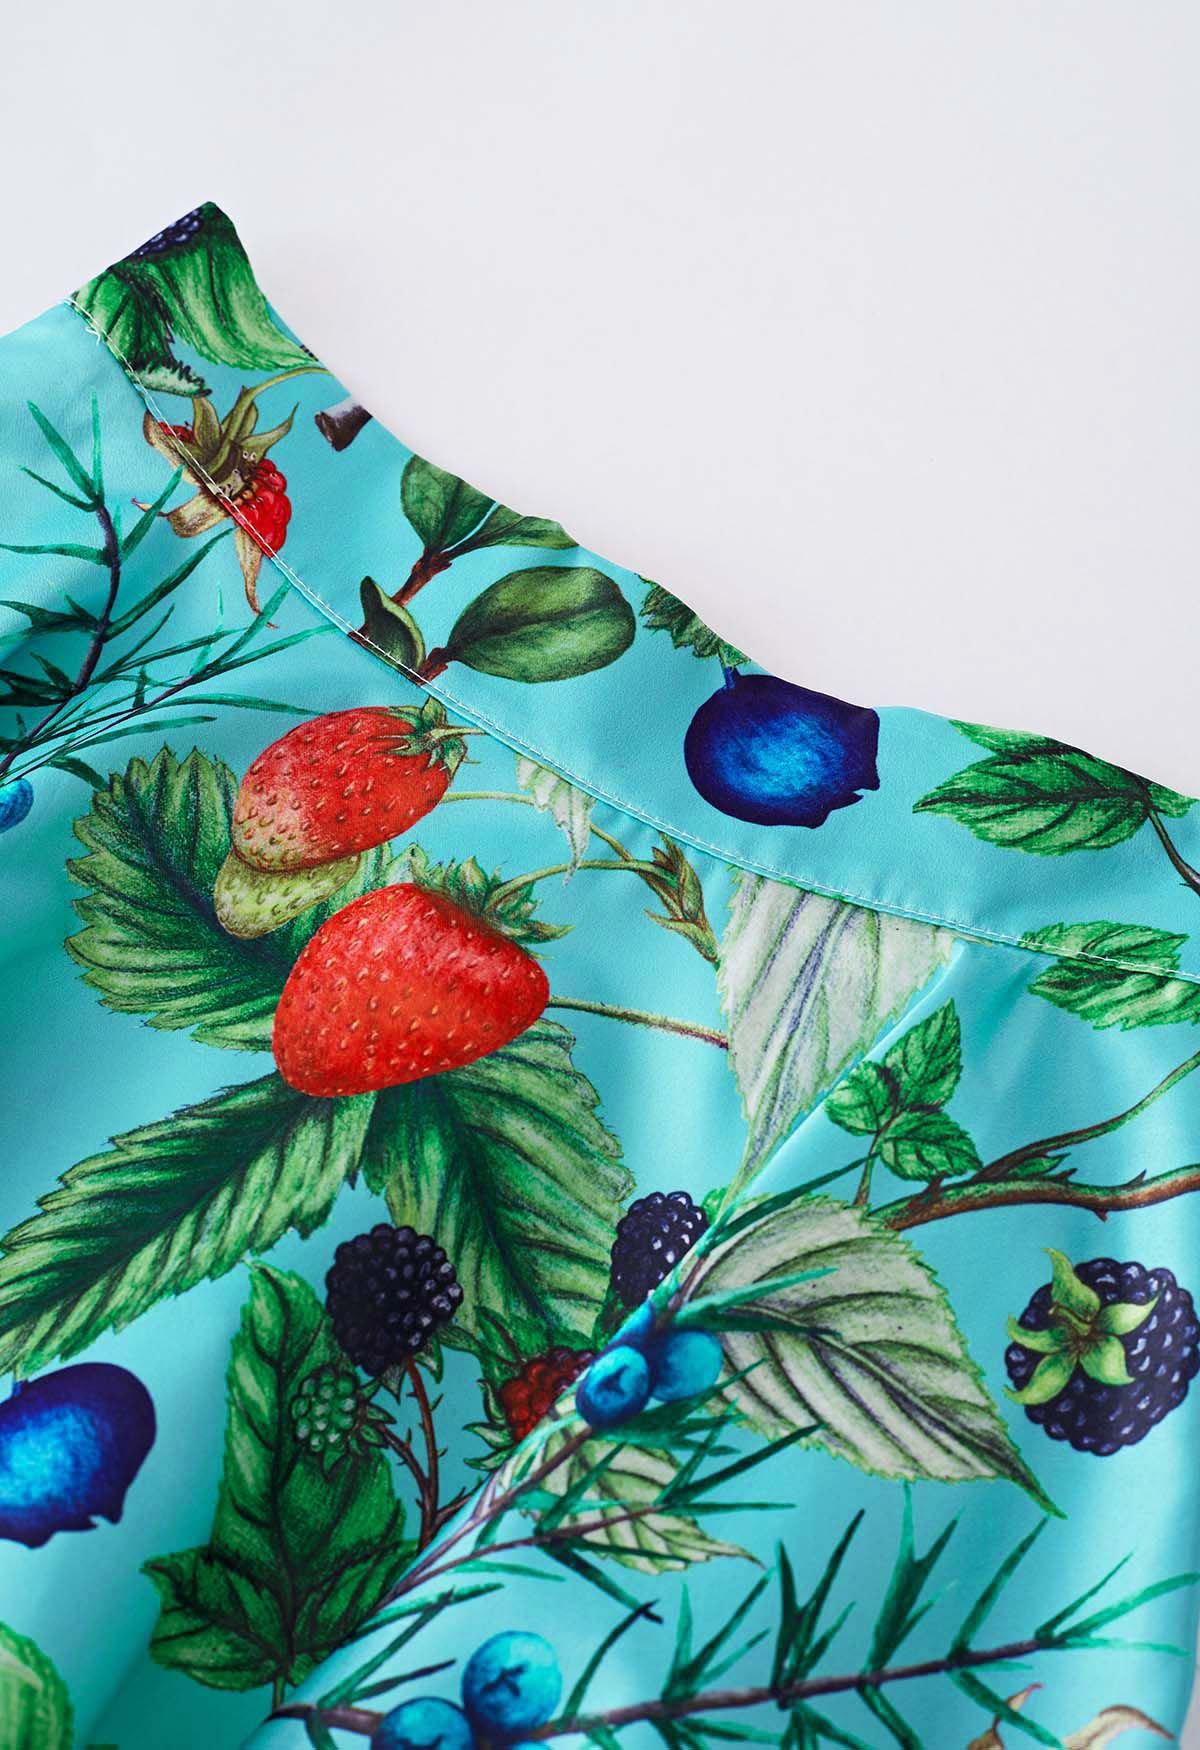 Glossy Fruit Printed A-Line Midi Skirt